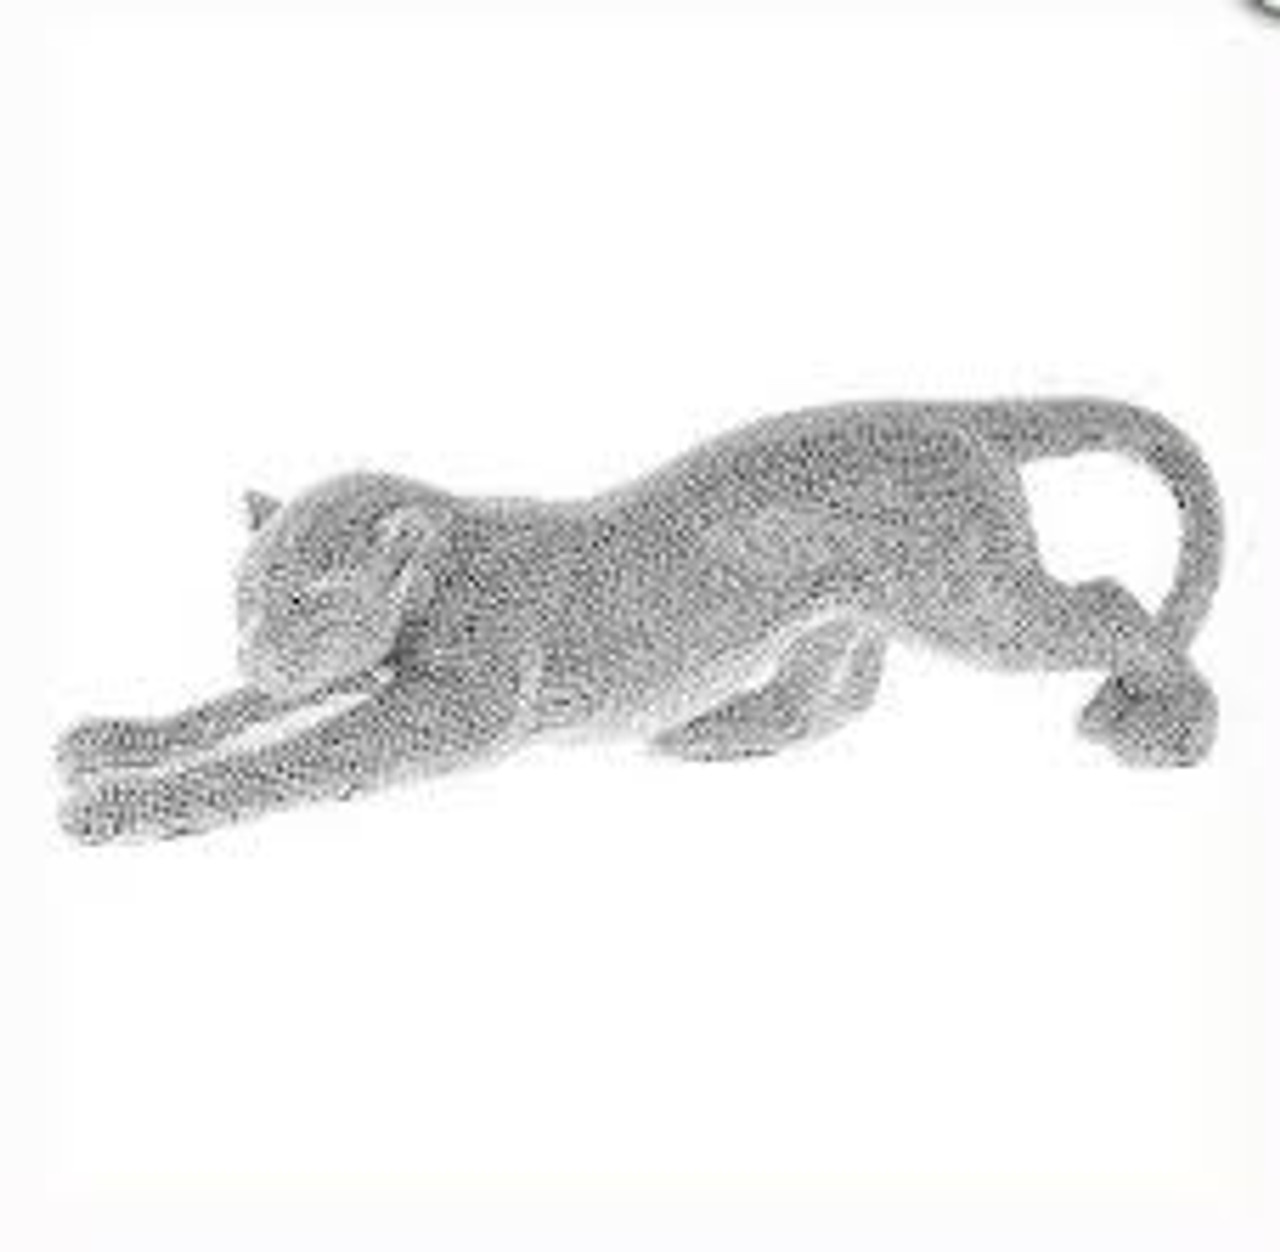 Leonardo Collection Silver Art Cheetah Sculpture Figurine Ornament 30cm -  Futura Online Shop